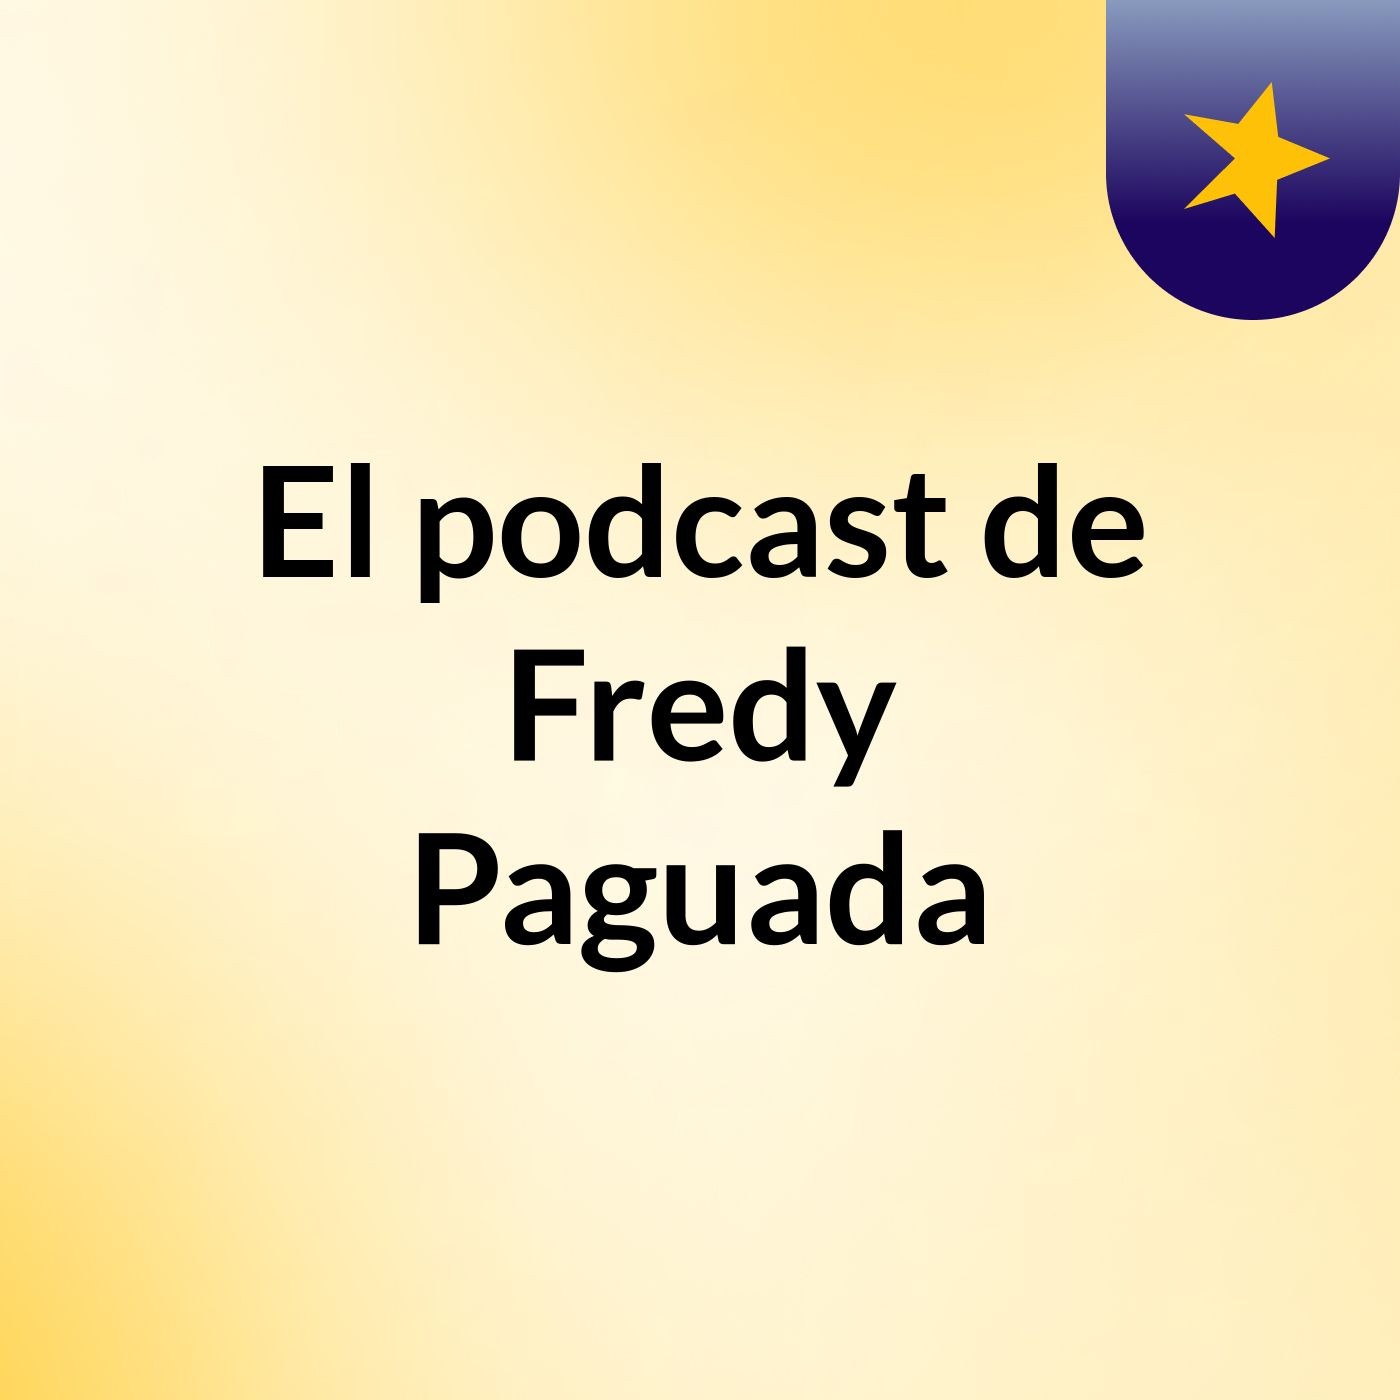 El podcast de Fredy Paguada